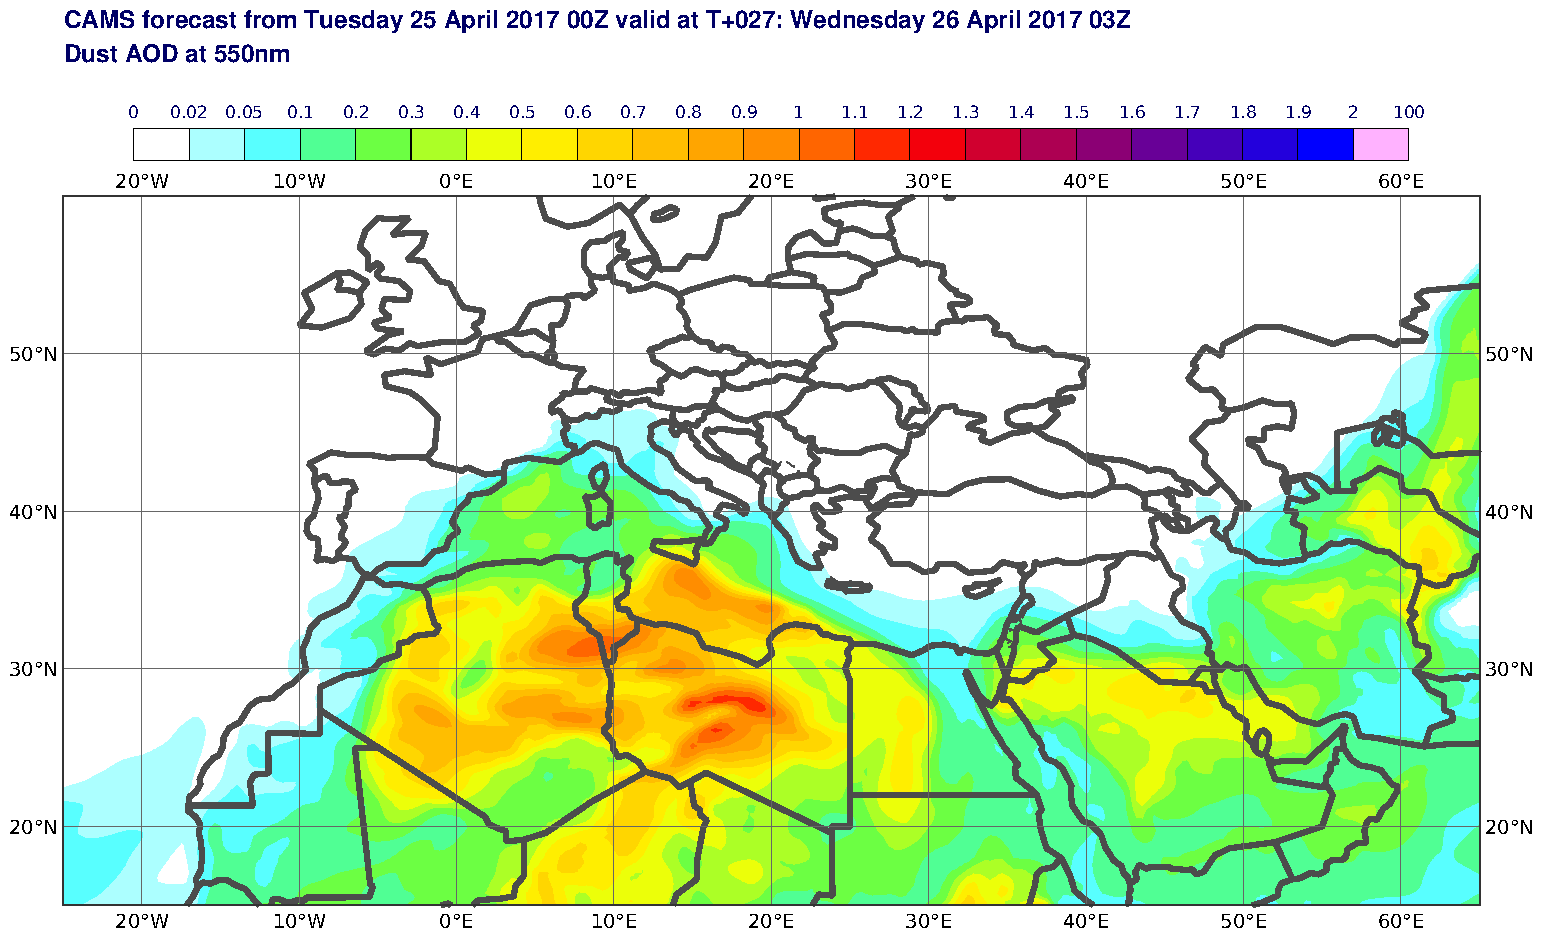 Dust AOD at 550nm valid at T27 - 2017-04-26 03:00